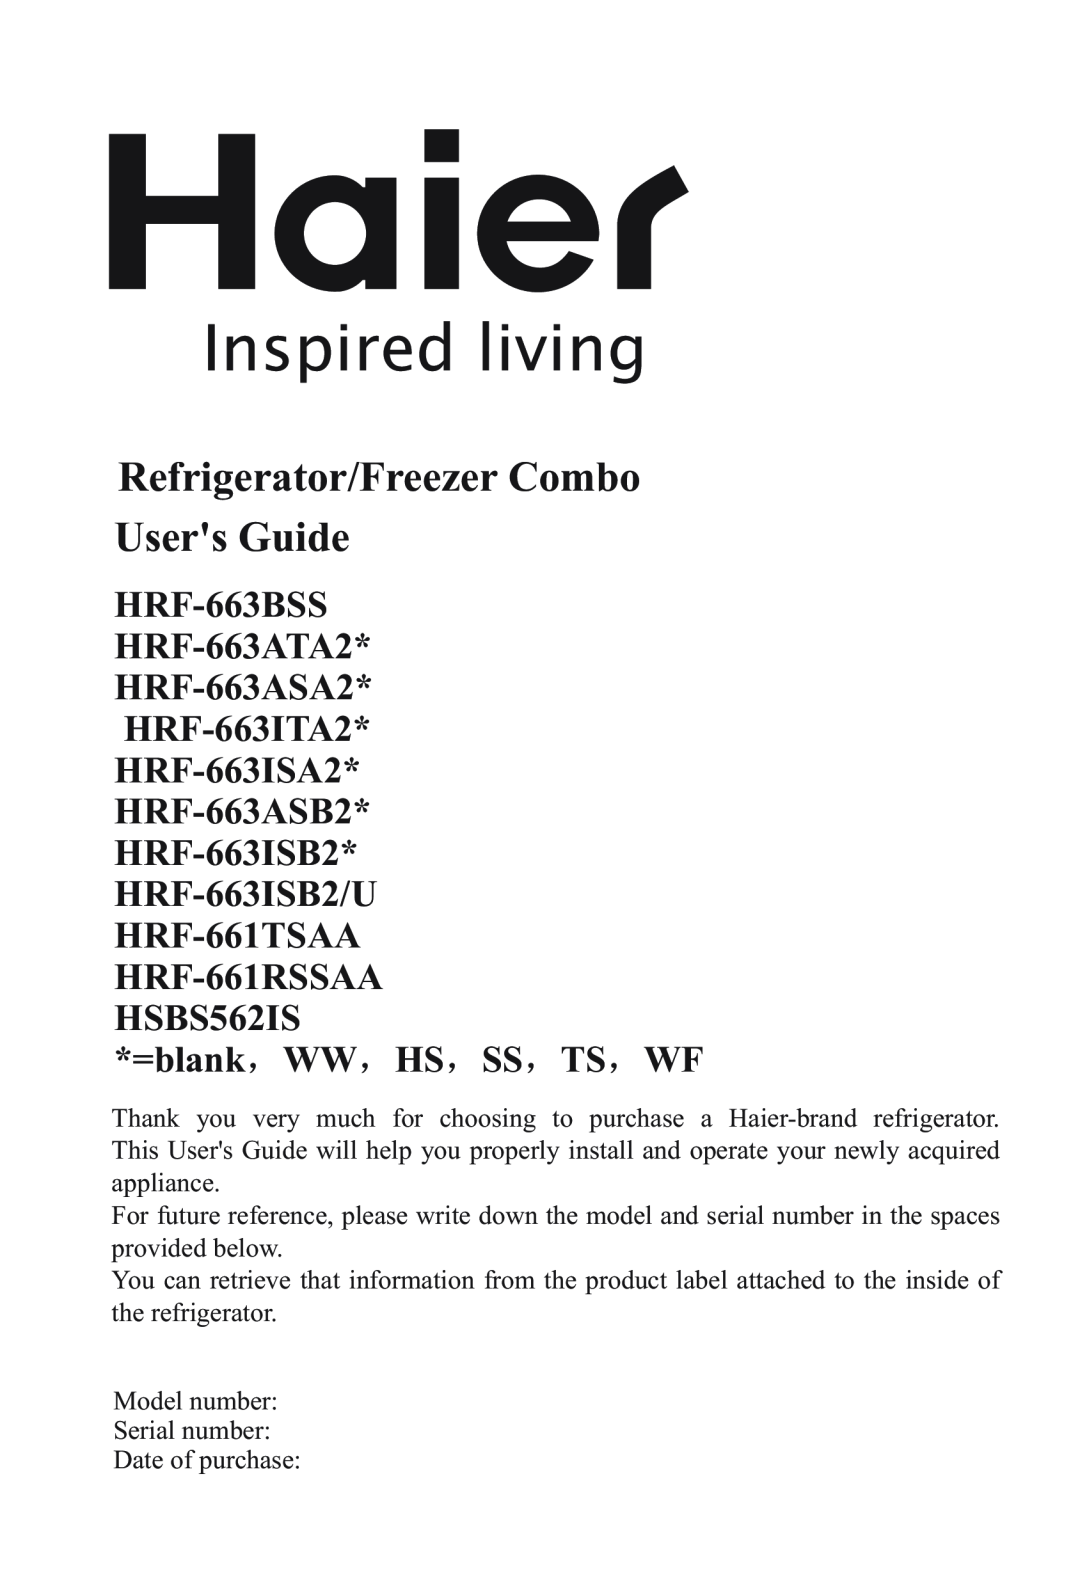 Haier HRF-66ATA2, HRF-66ITA2 manual Refrigerator/Freezer Combo Users Guide, Inspired living, =blank WW HS SS TS WF 